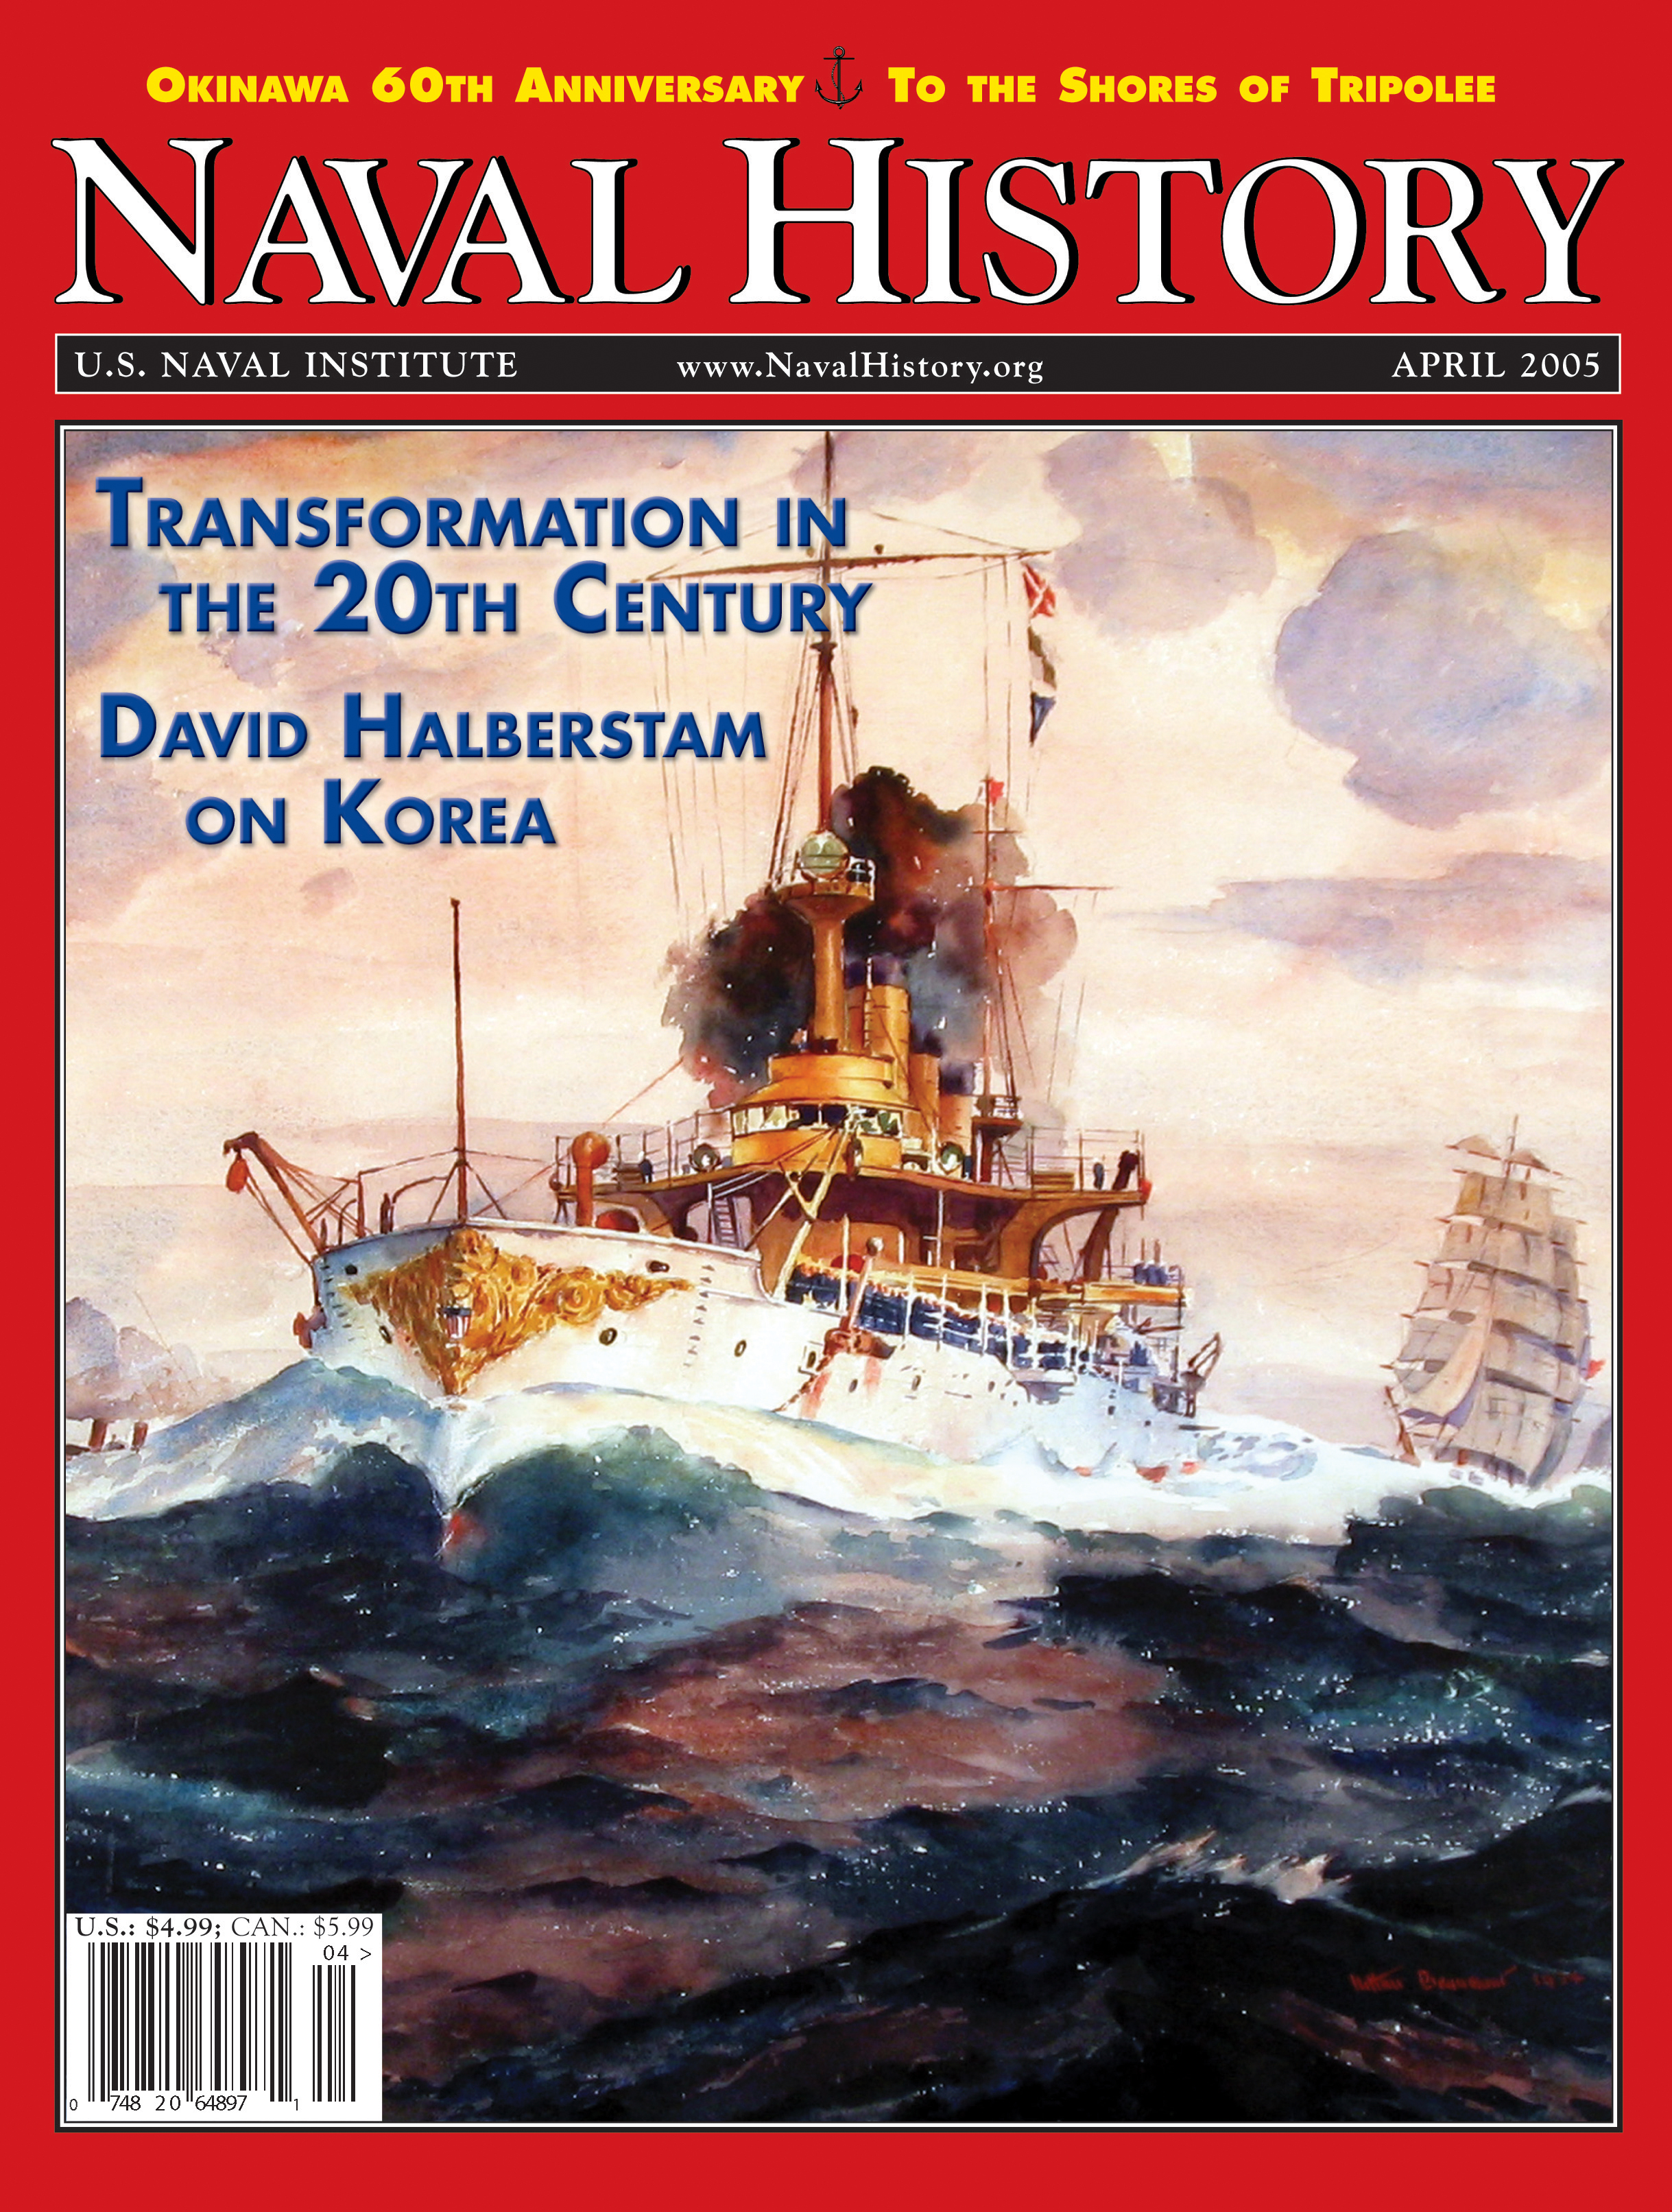 Naval History Magazine April 2005 Cover